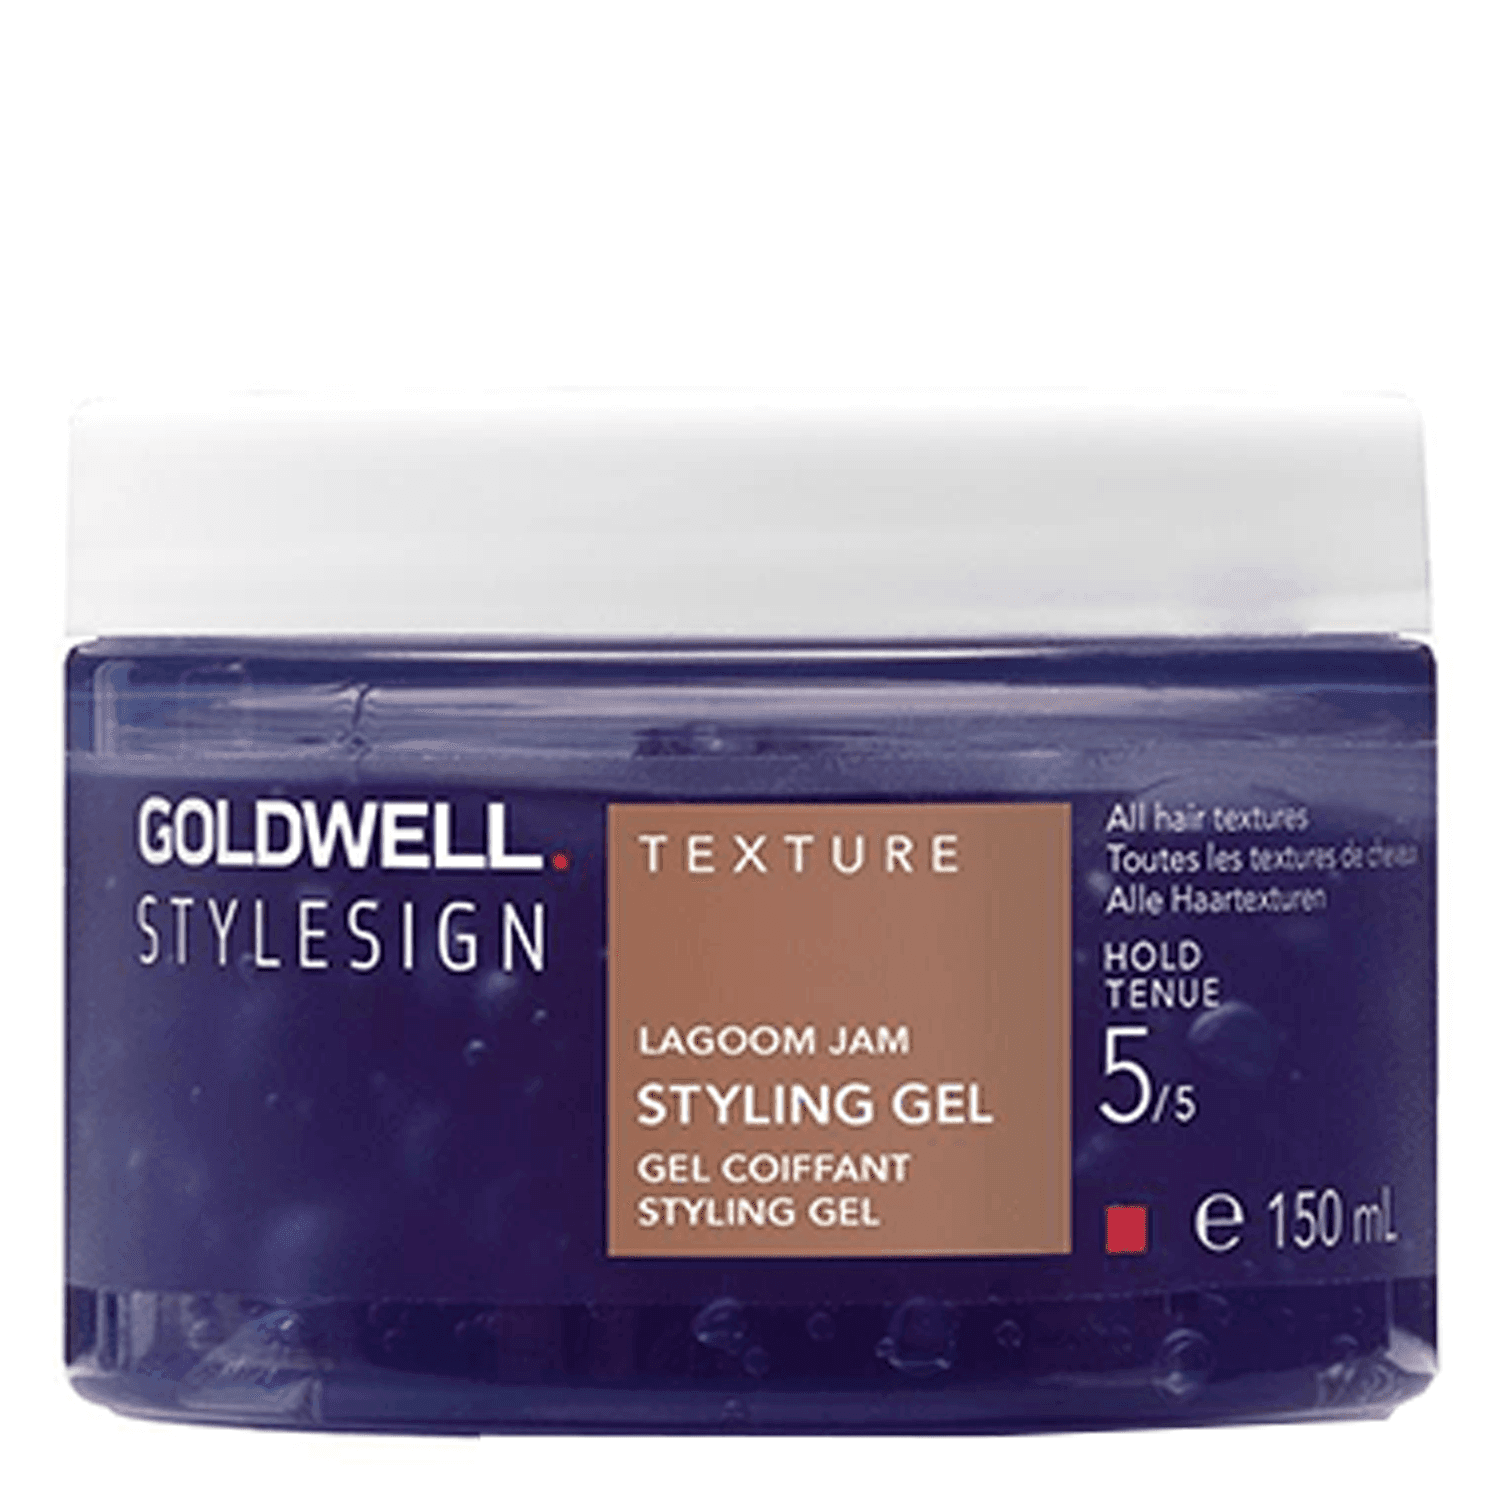 StyleSign - texture lagoom jam styling gel